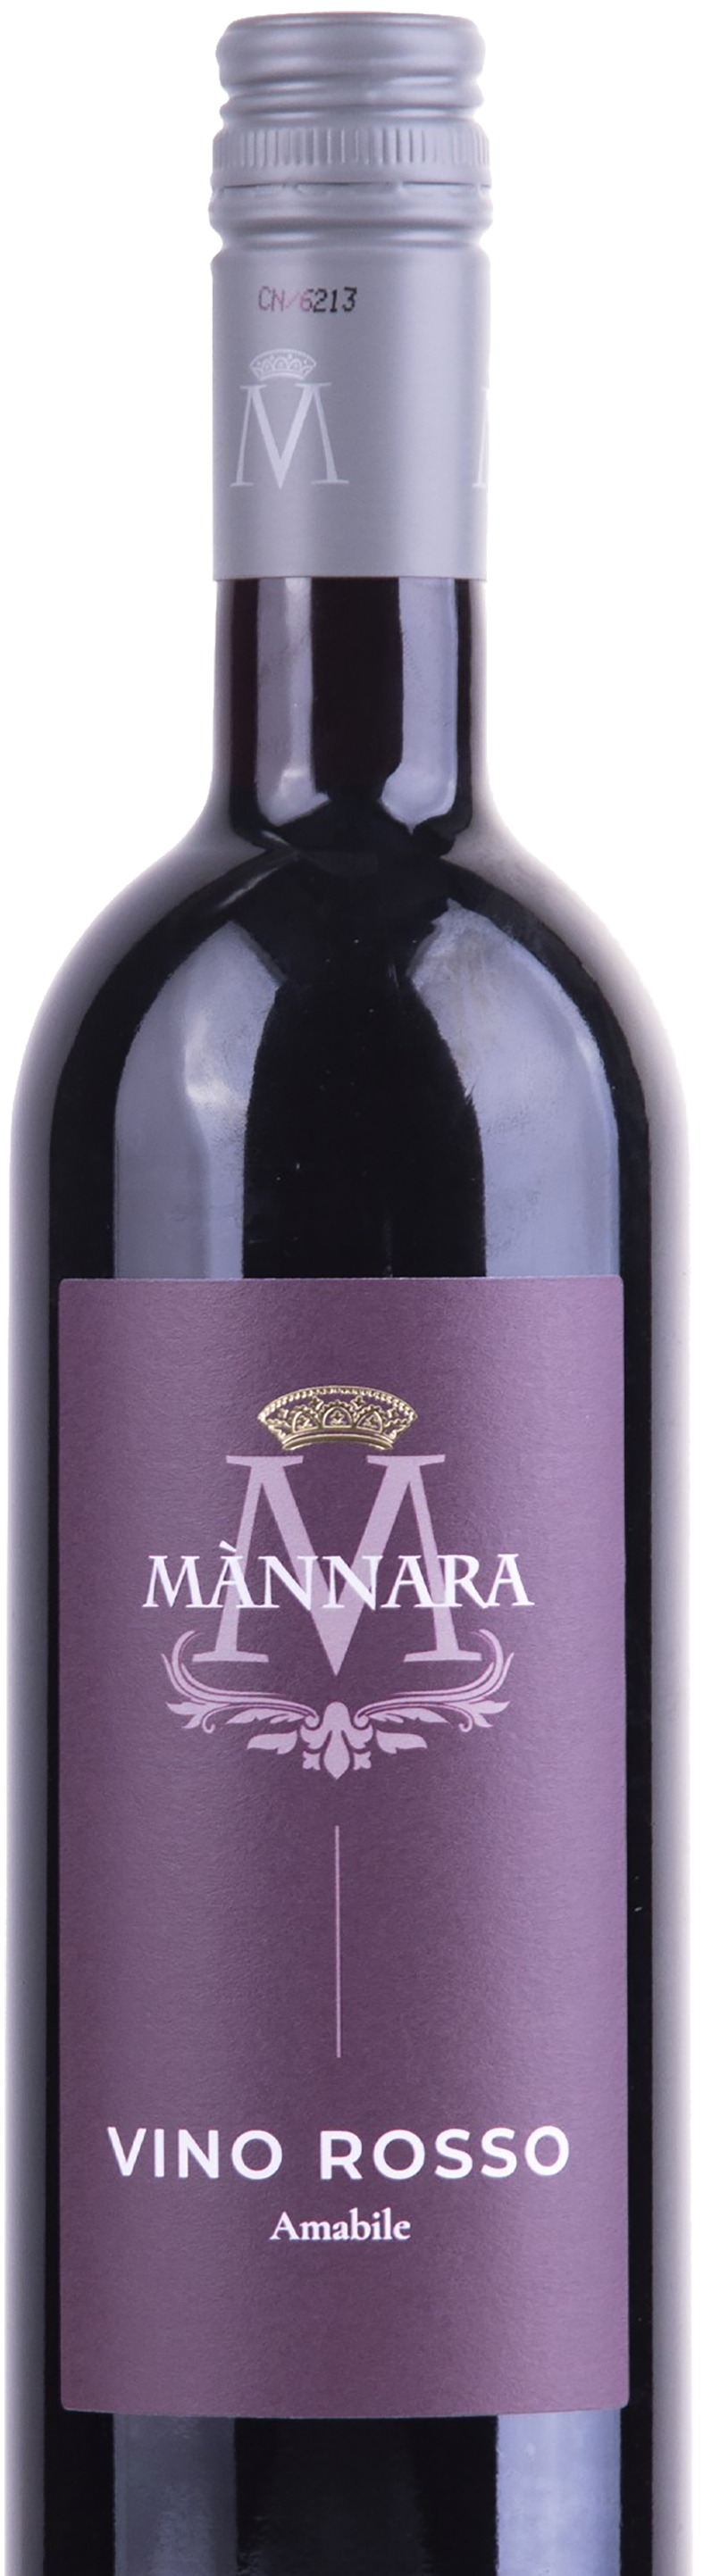 67979 Mánnara Vino rosso Amabile